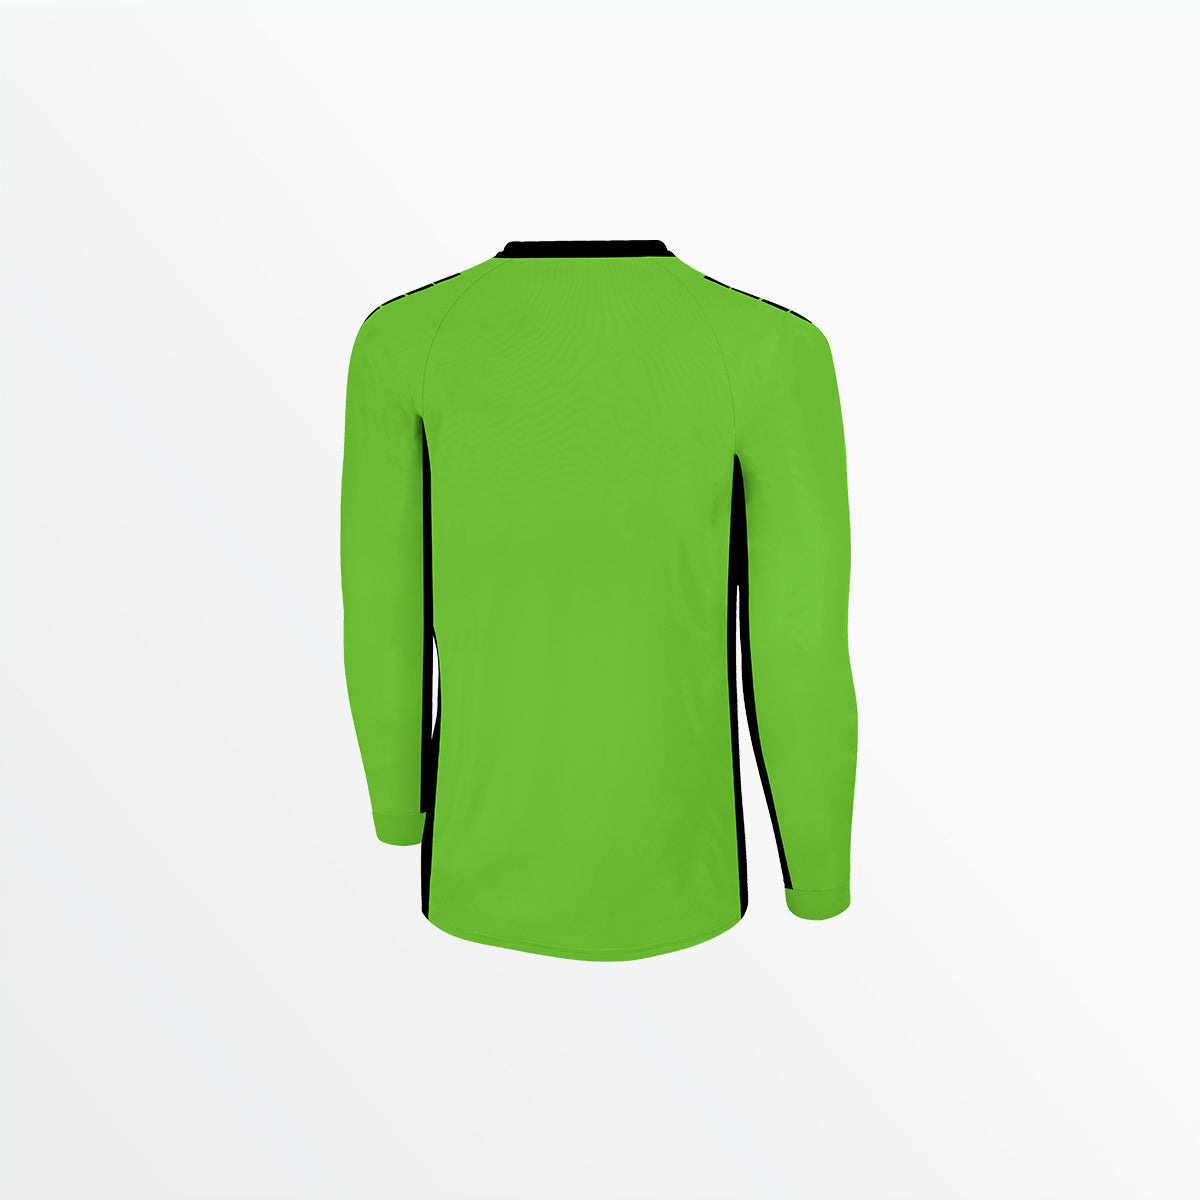 COLO Scale Goalkeeper Jersey - Football Long Sleeve